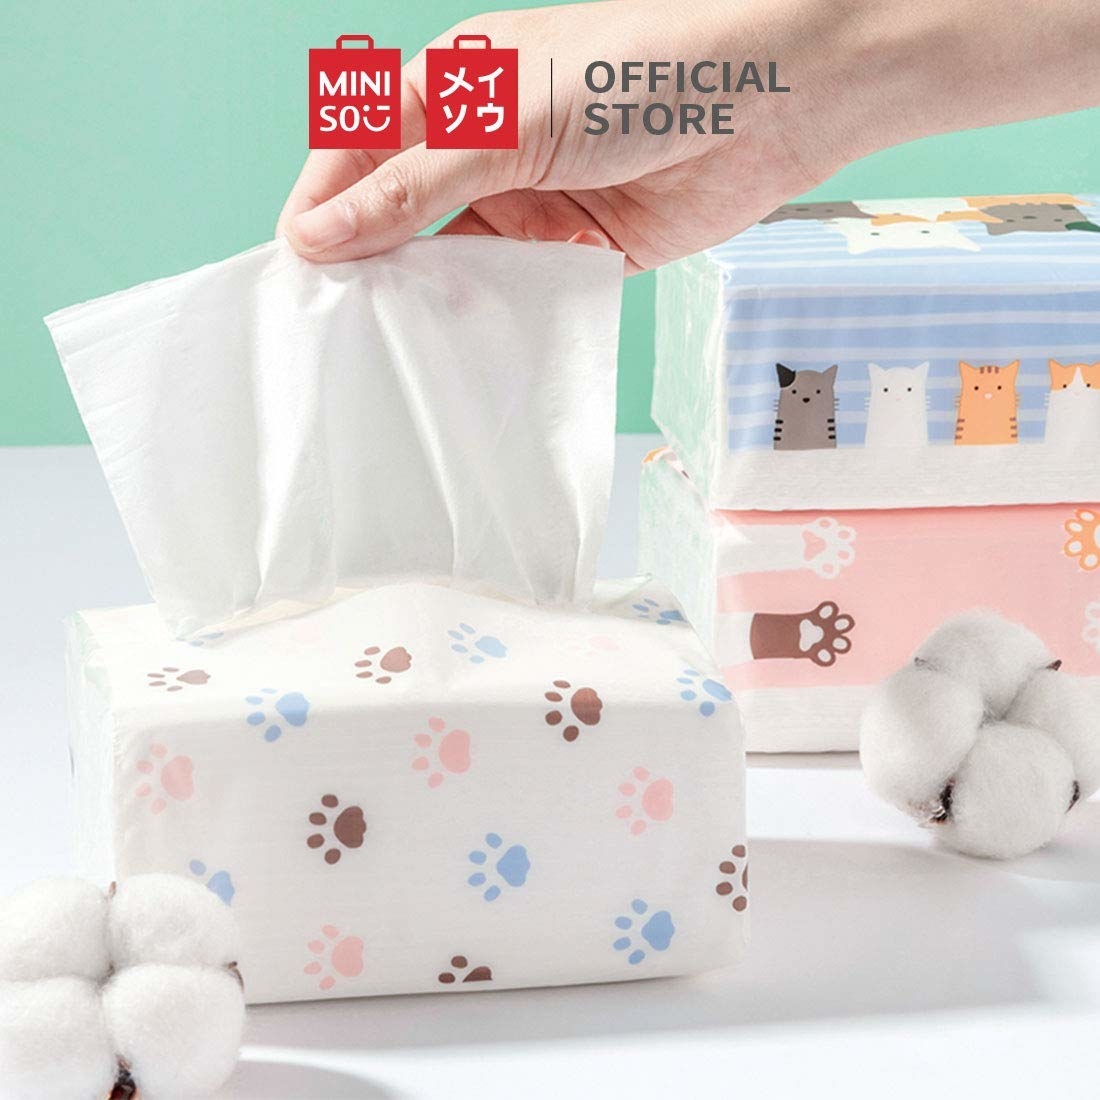 A tissue box on a table next to cotton balls